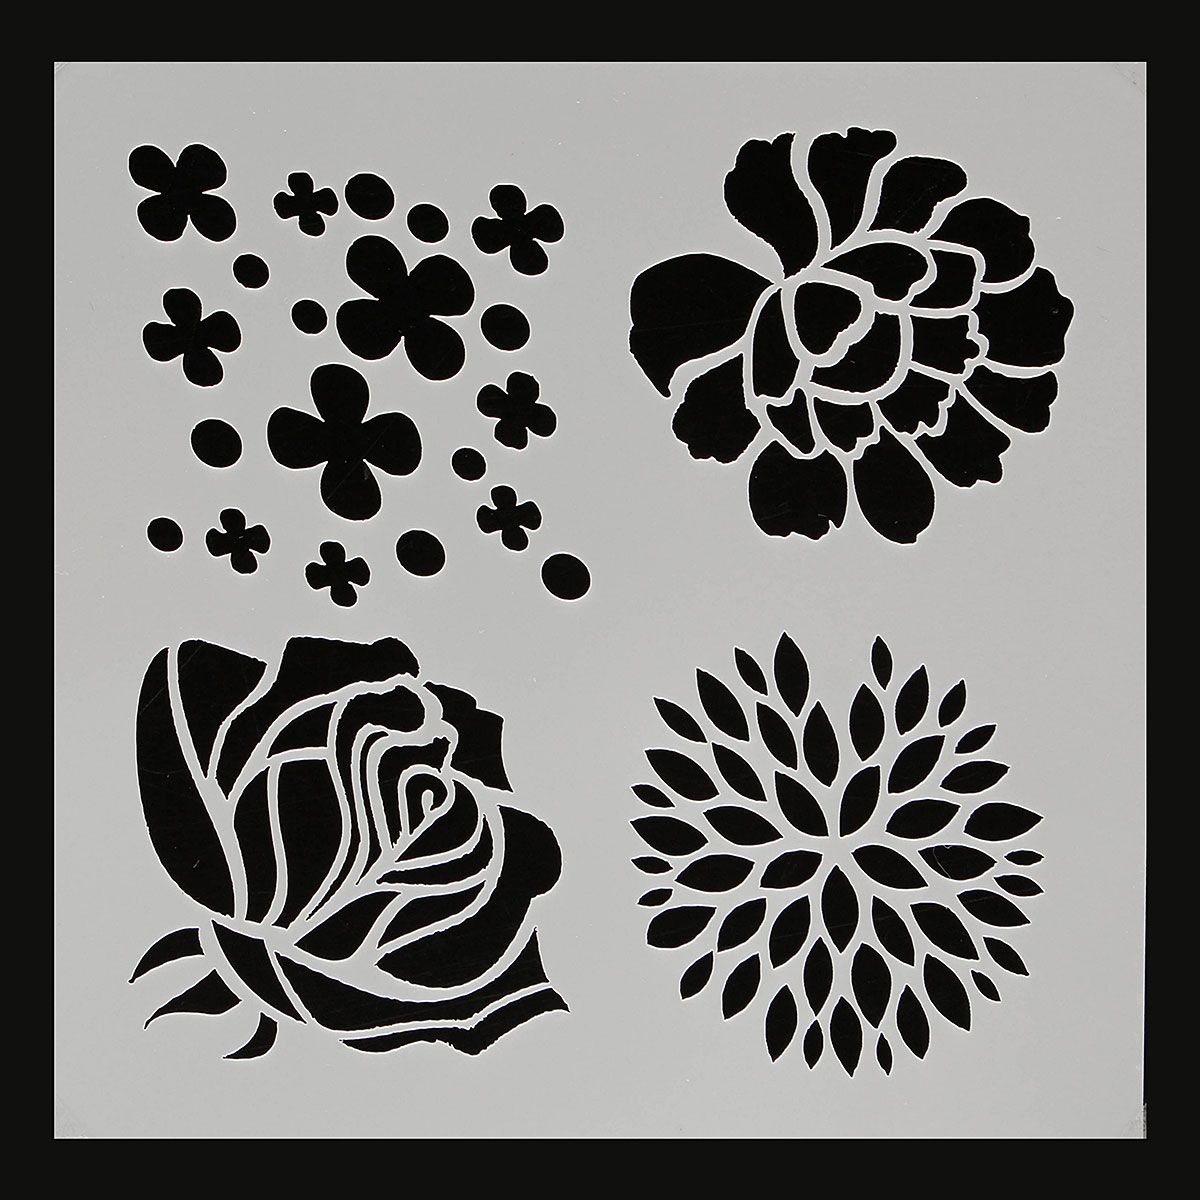 Dot-Star-Heart-Rose-Sakura-Flower-Painting-Stencils-DIY-Scrapbook-Photo-Album-Hand-Craft-1382011